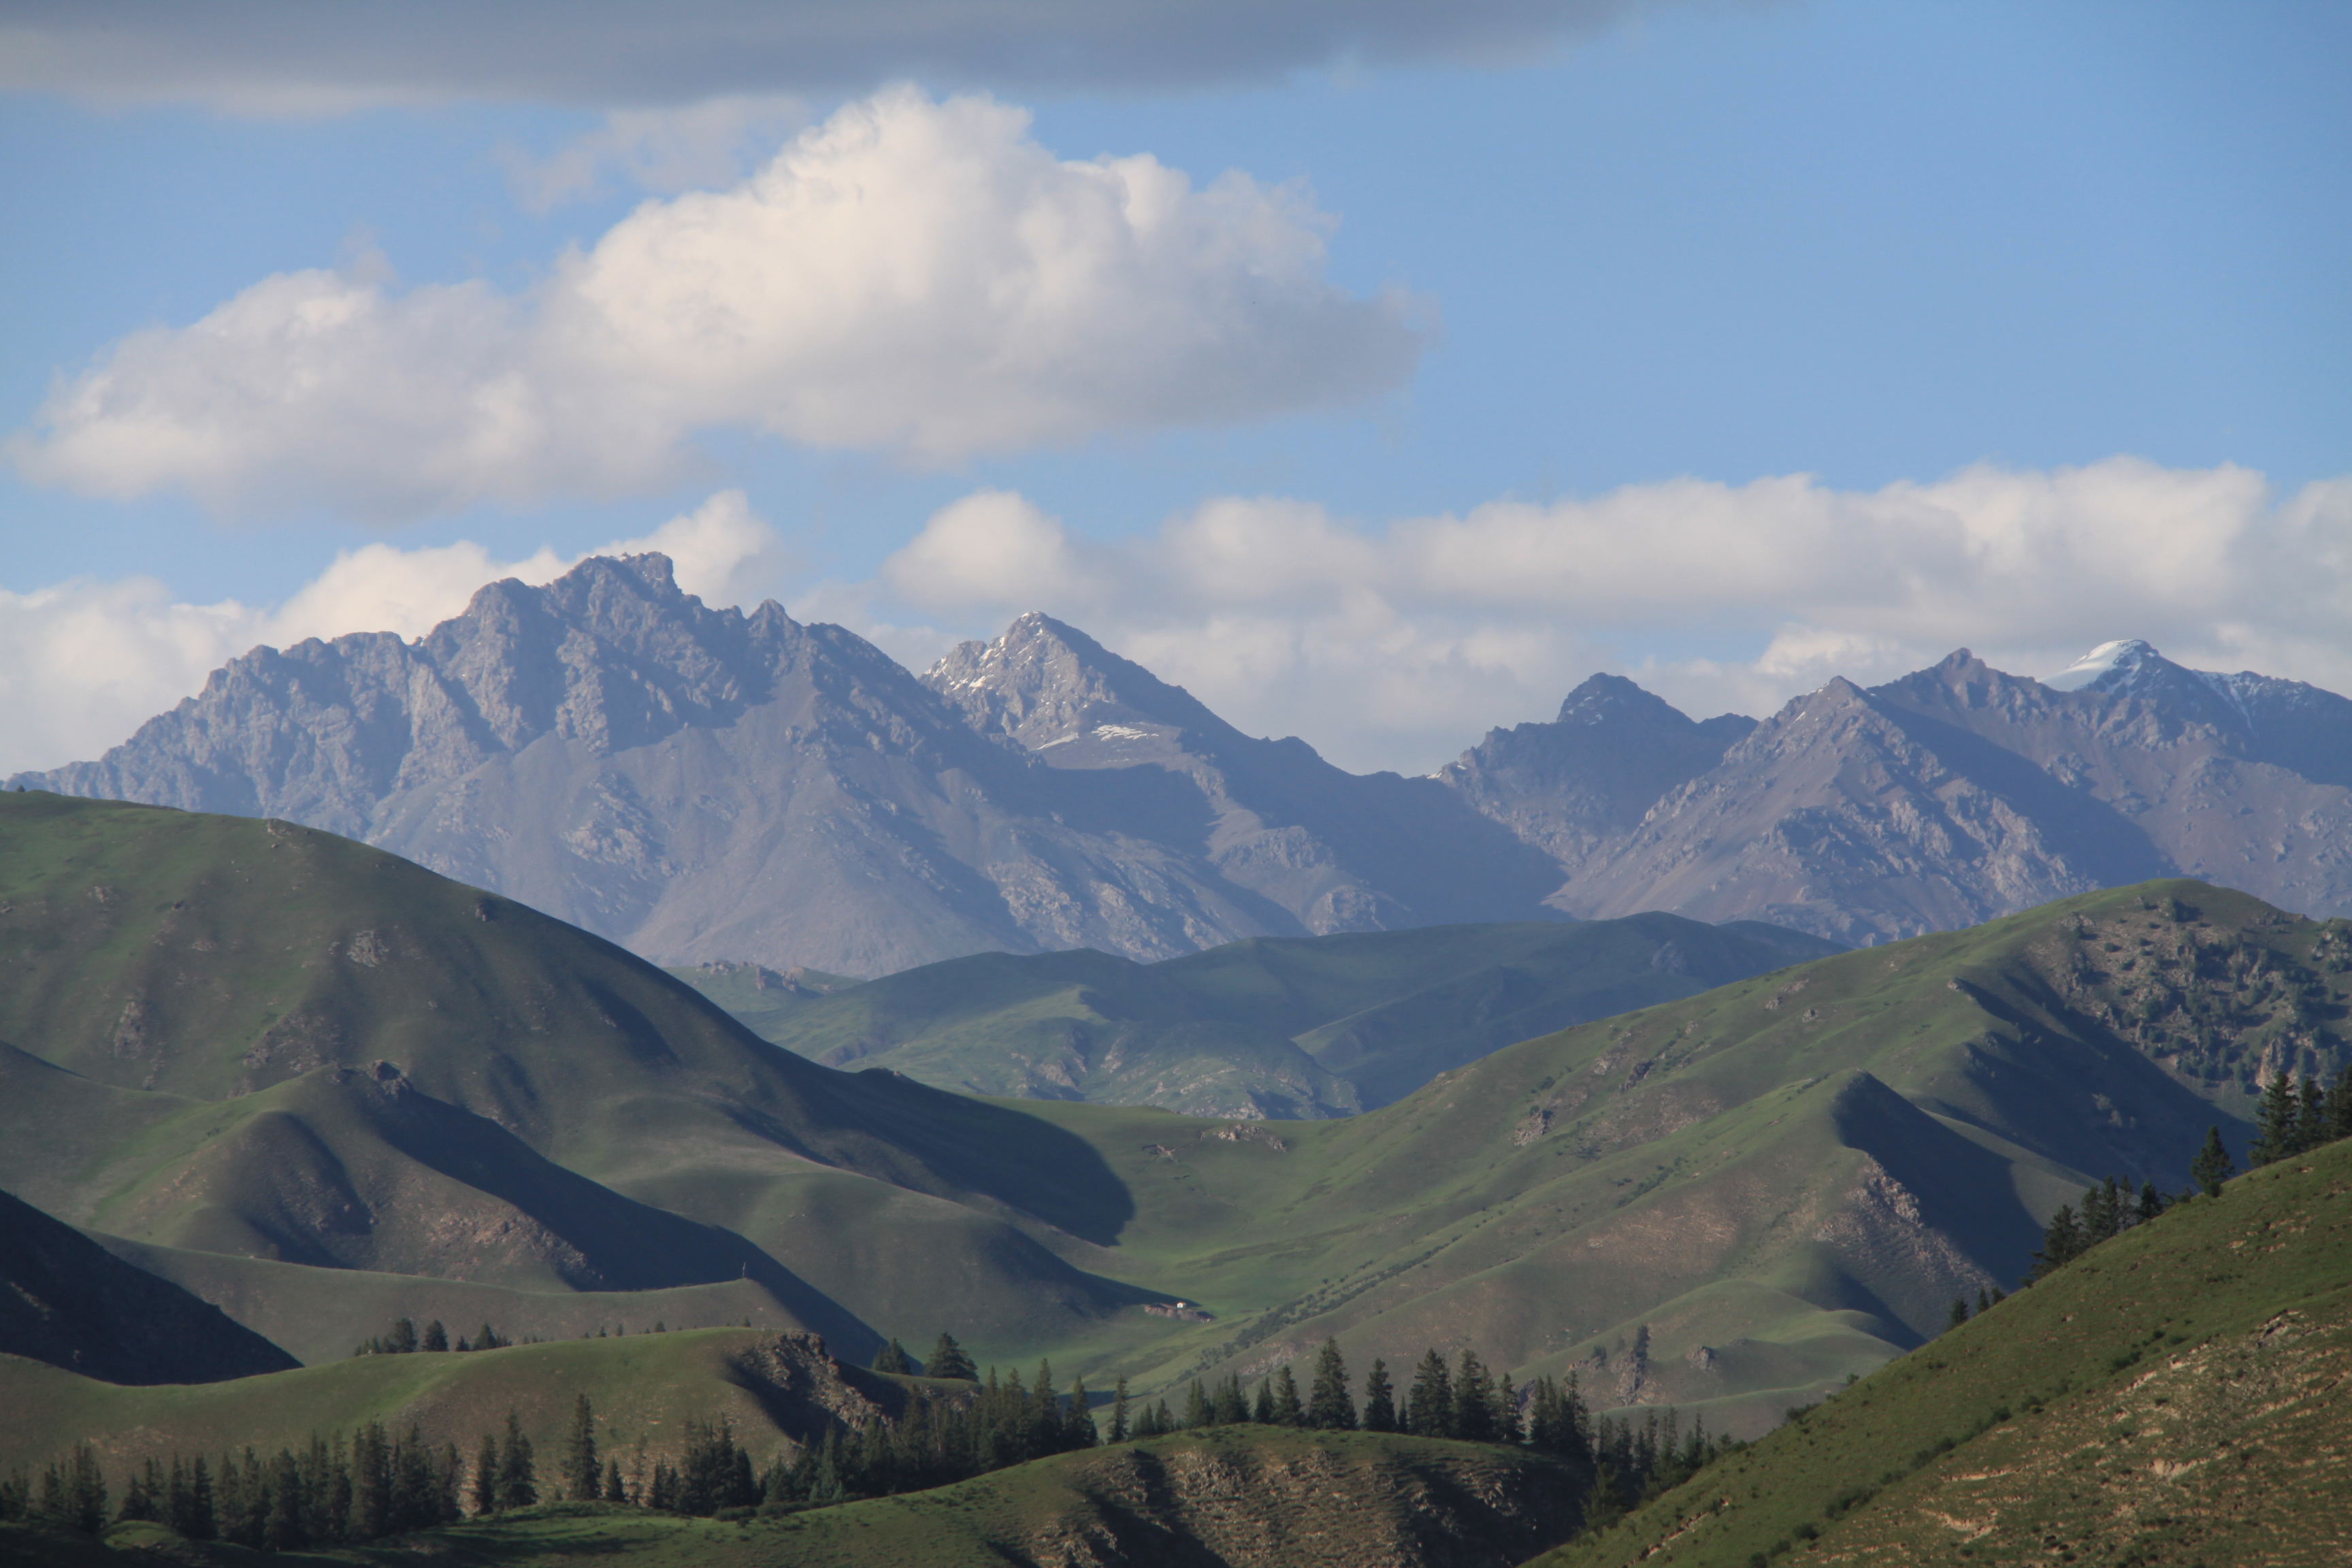 View of the Tibetan plateau